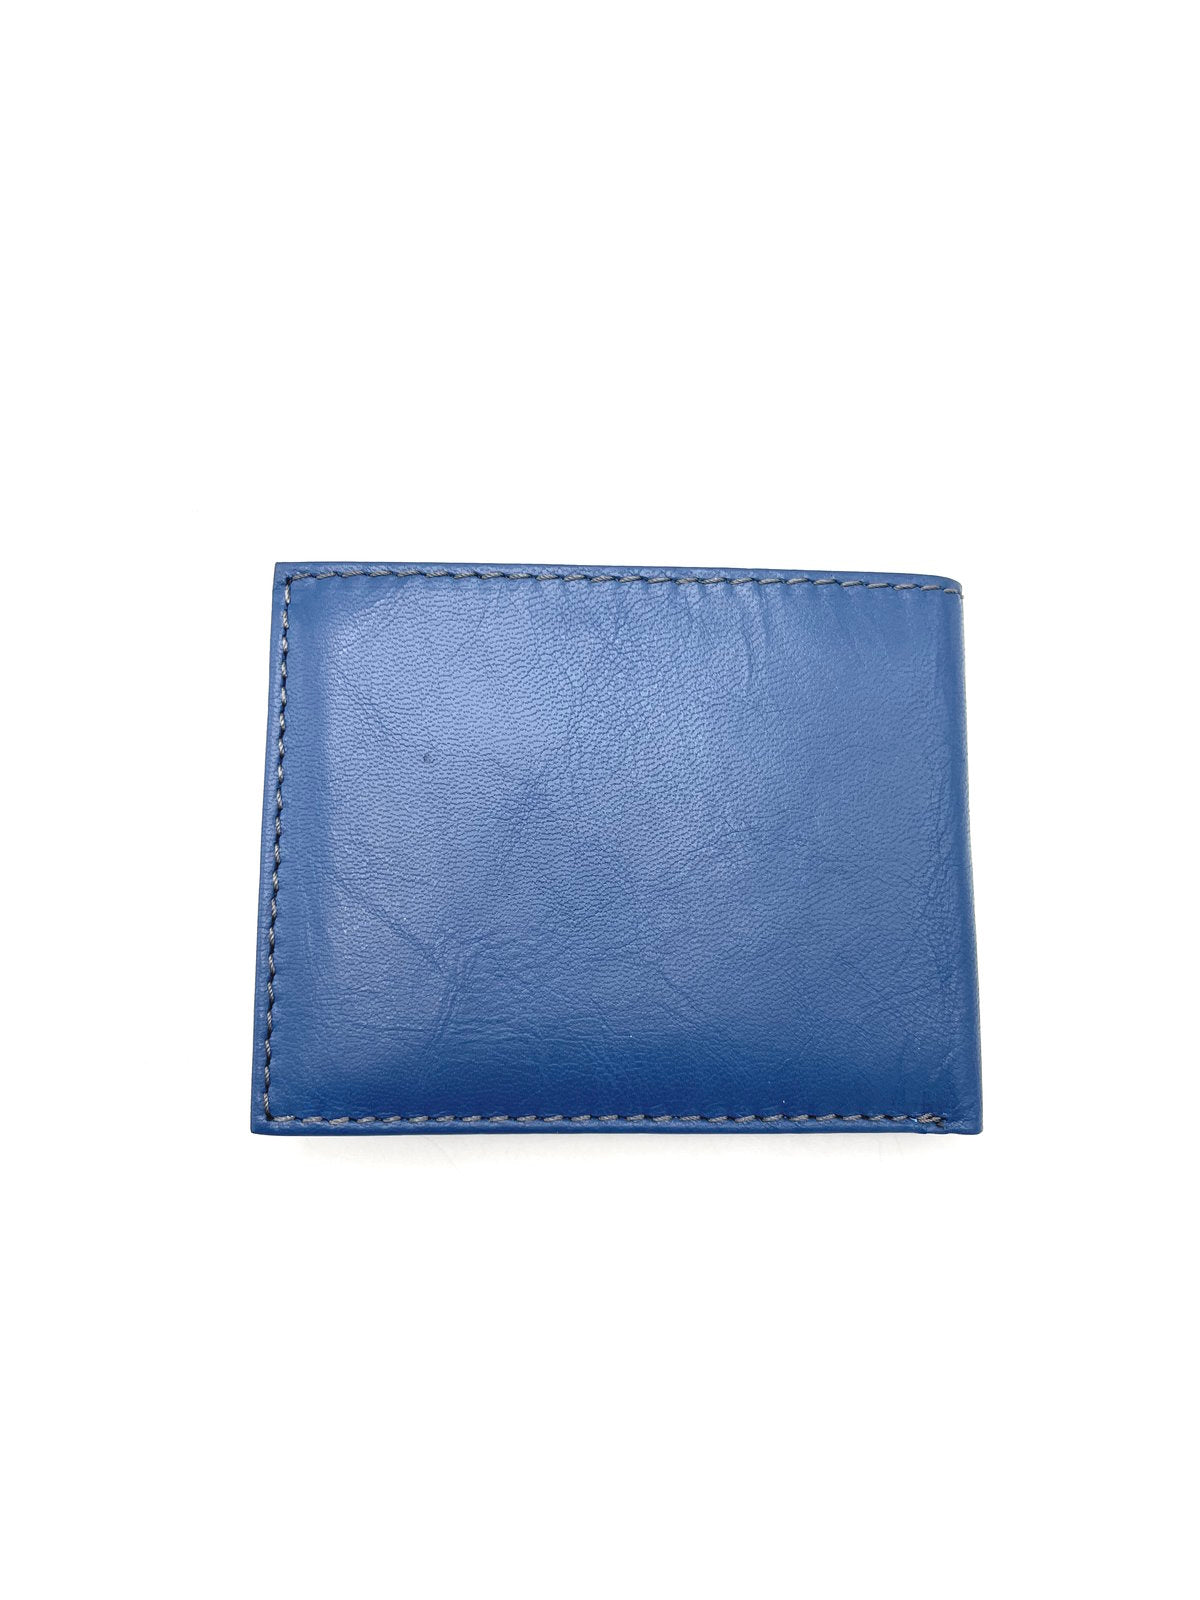 Brand Wampum, Genuine leather wallet, for men, art. PDK259-1.425